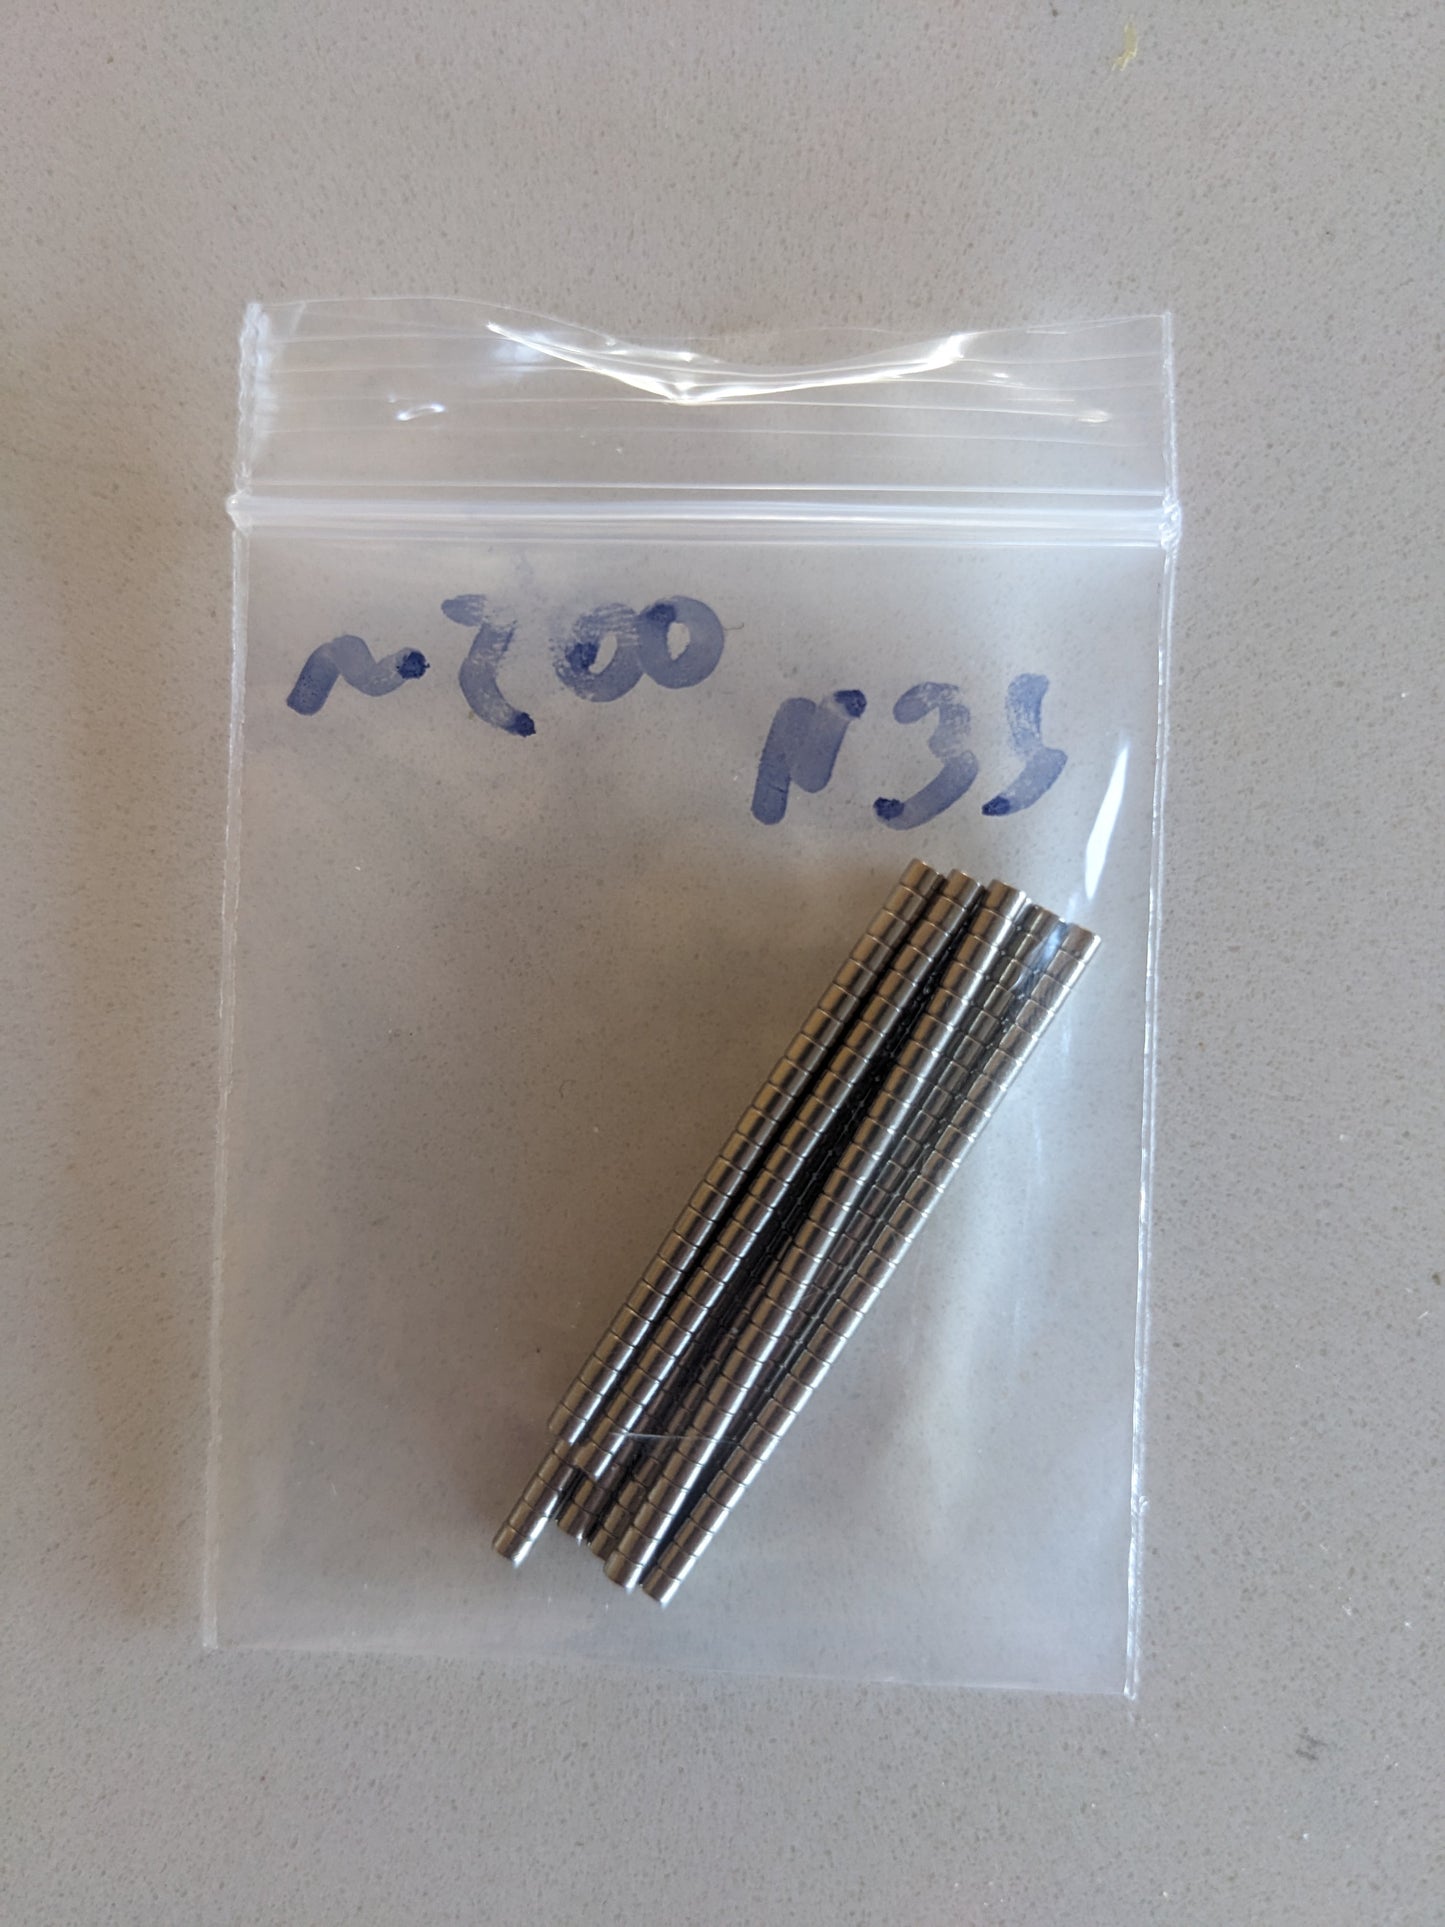 N35 Magnets 2.00mm x 1.50mm (+/- 0.03mm)